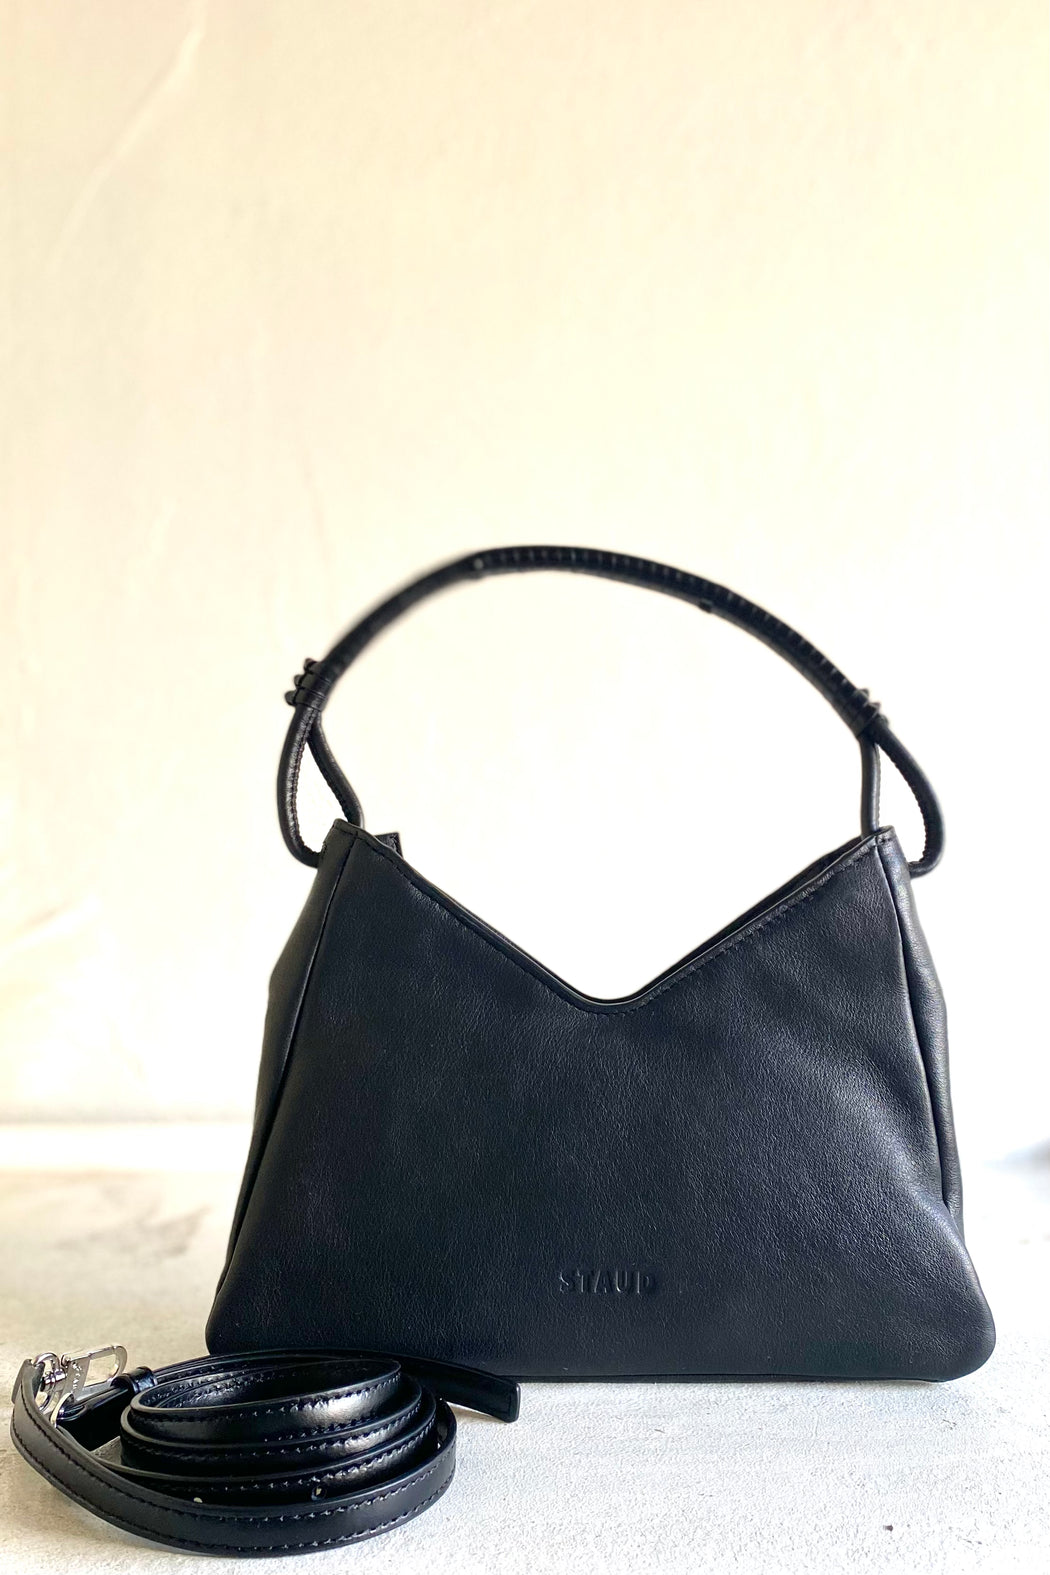 Staud - Valerie Shoulder Bag in Black